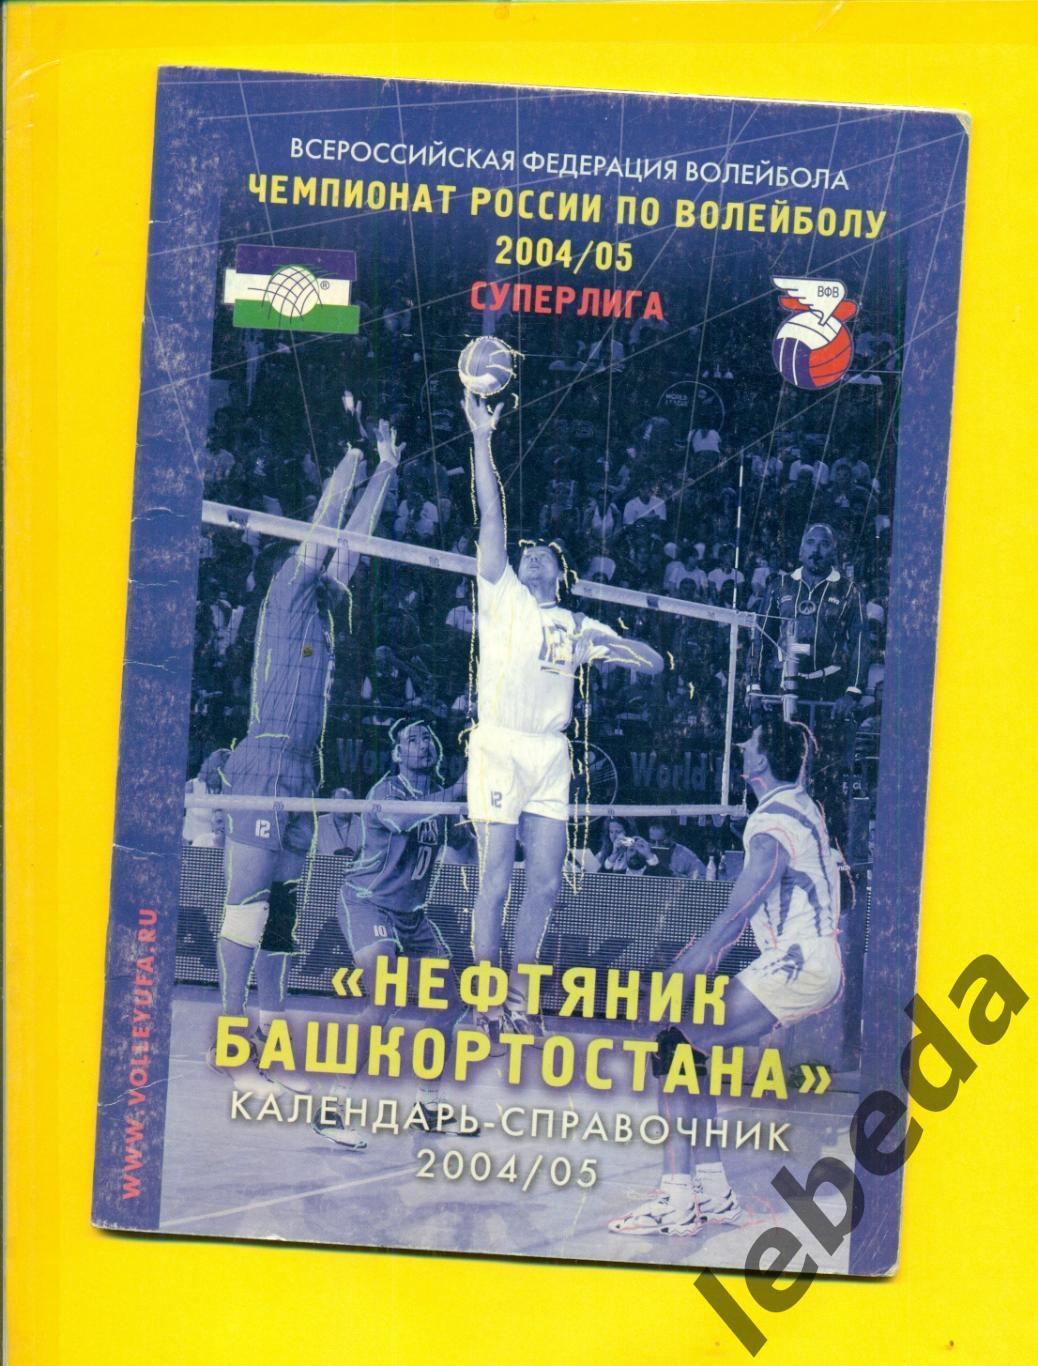 Нефтяник Башкортостана Уфа - 2004 / 2005 г. Календарь справочник.